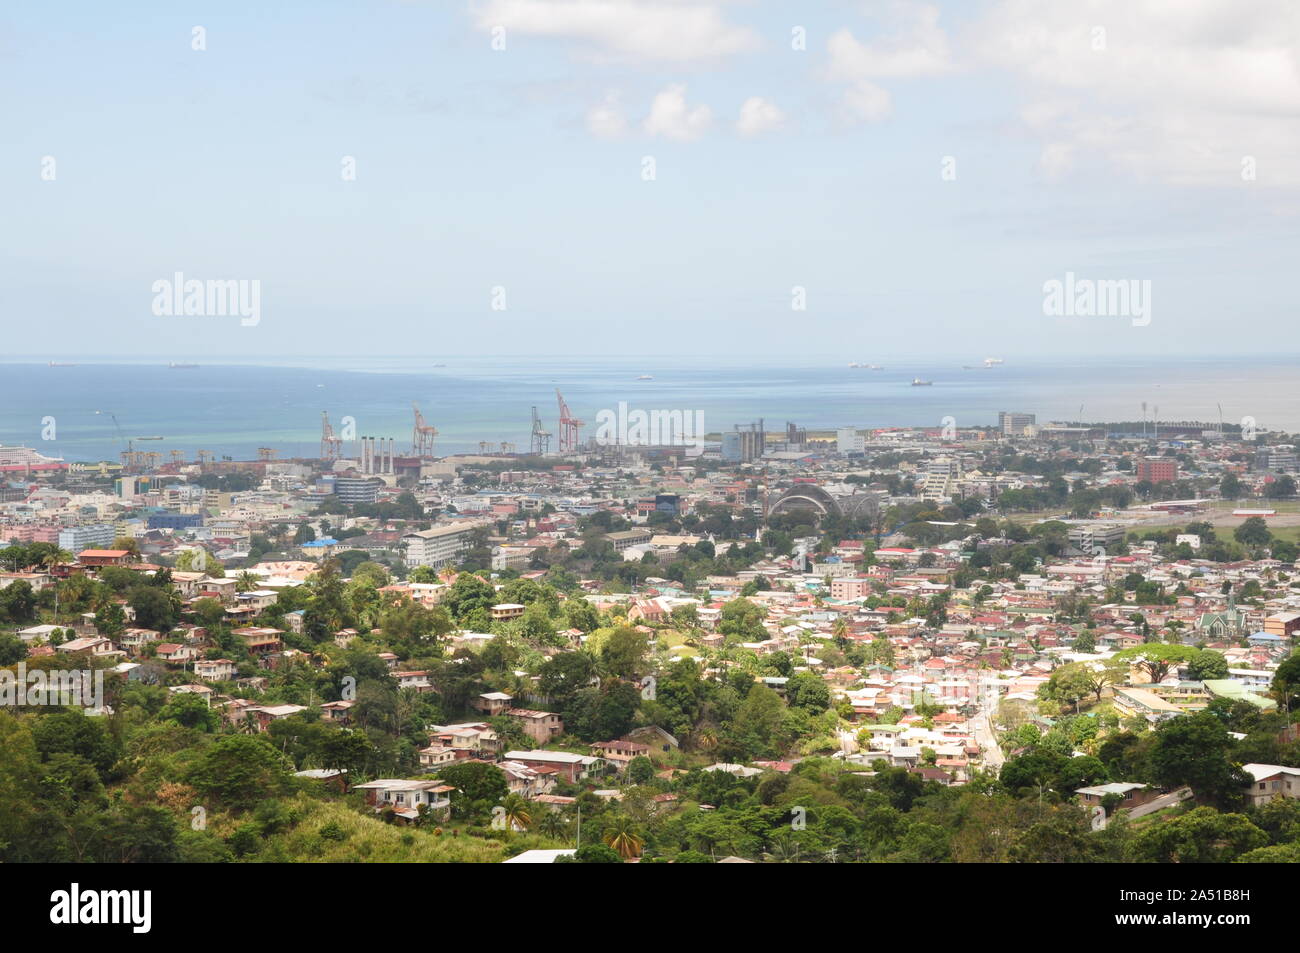 Port of Spain, Trinidad Stock Photo